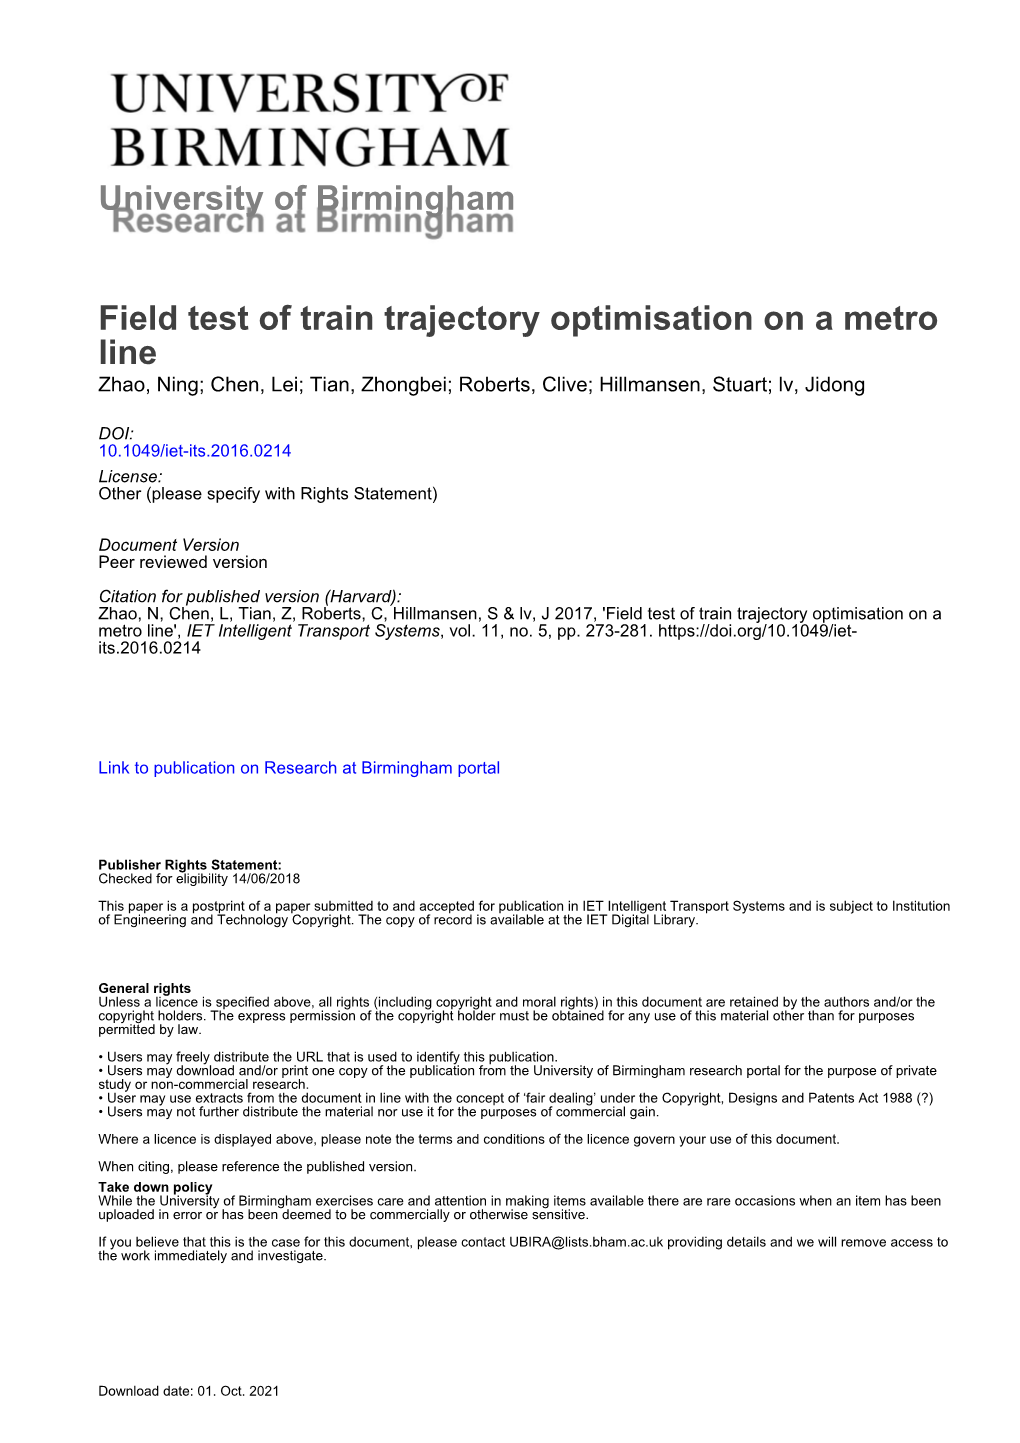 University of Birmingham Field Test of Train Trajectory Optimisation on A